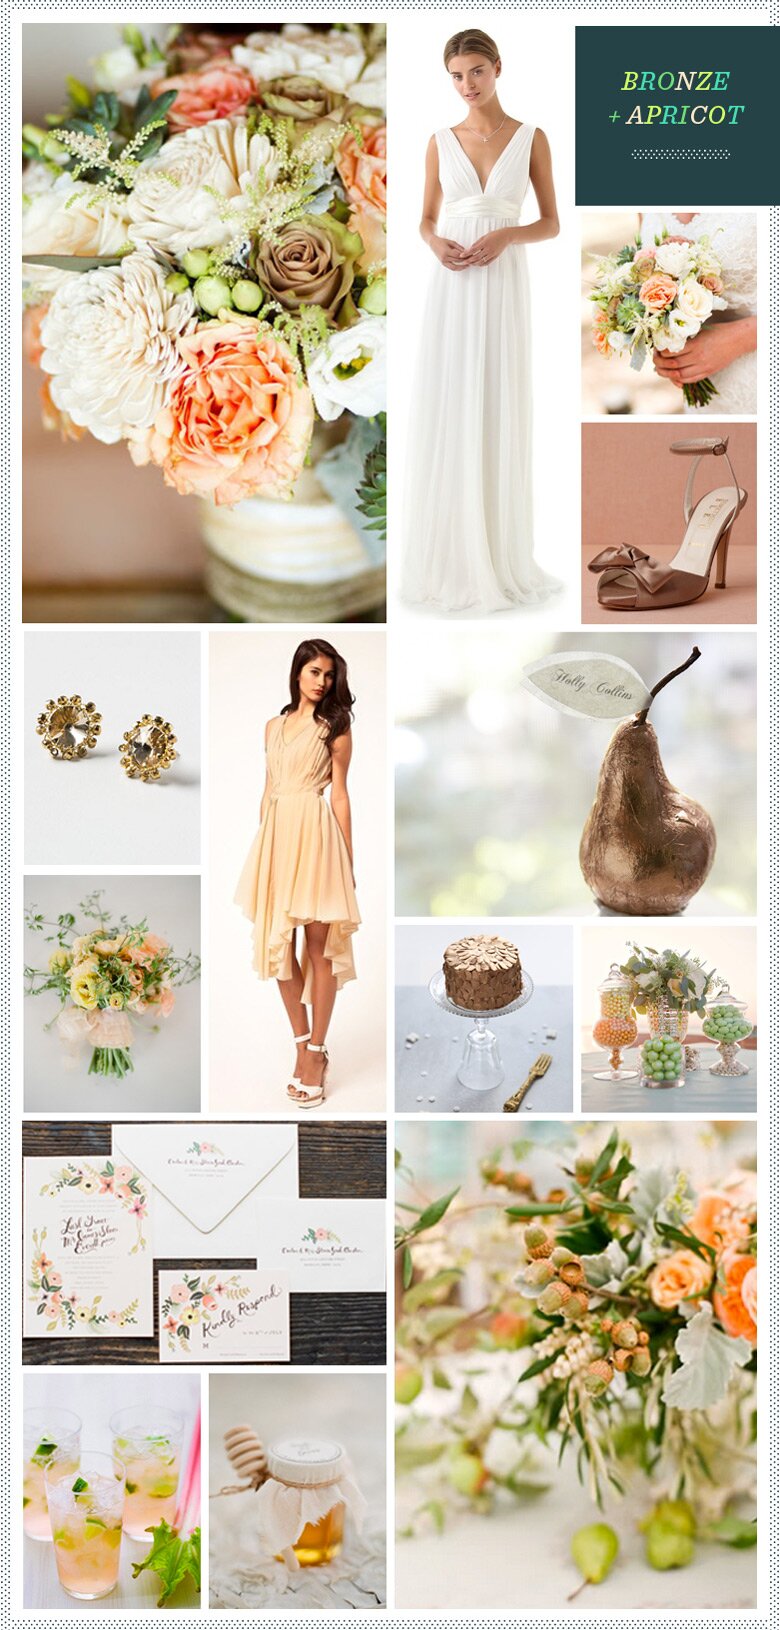 REVEL: Bronze + Apricot Wedding Inspiration